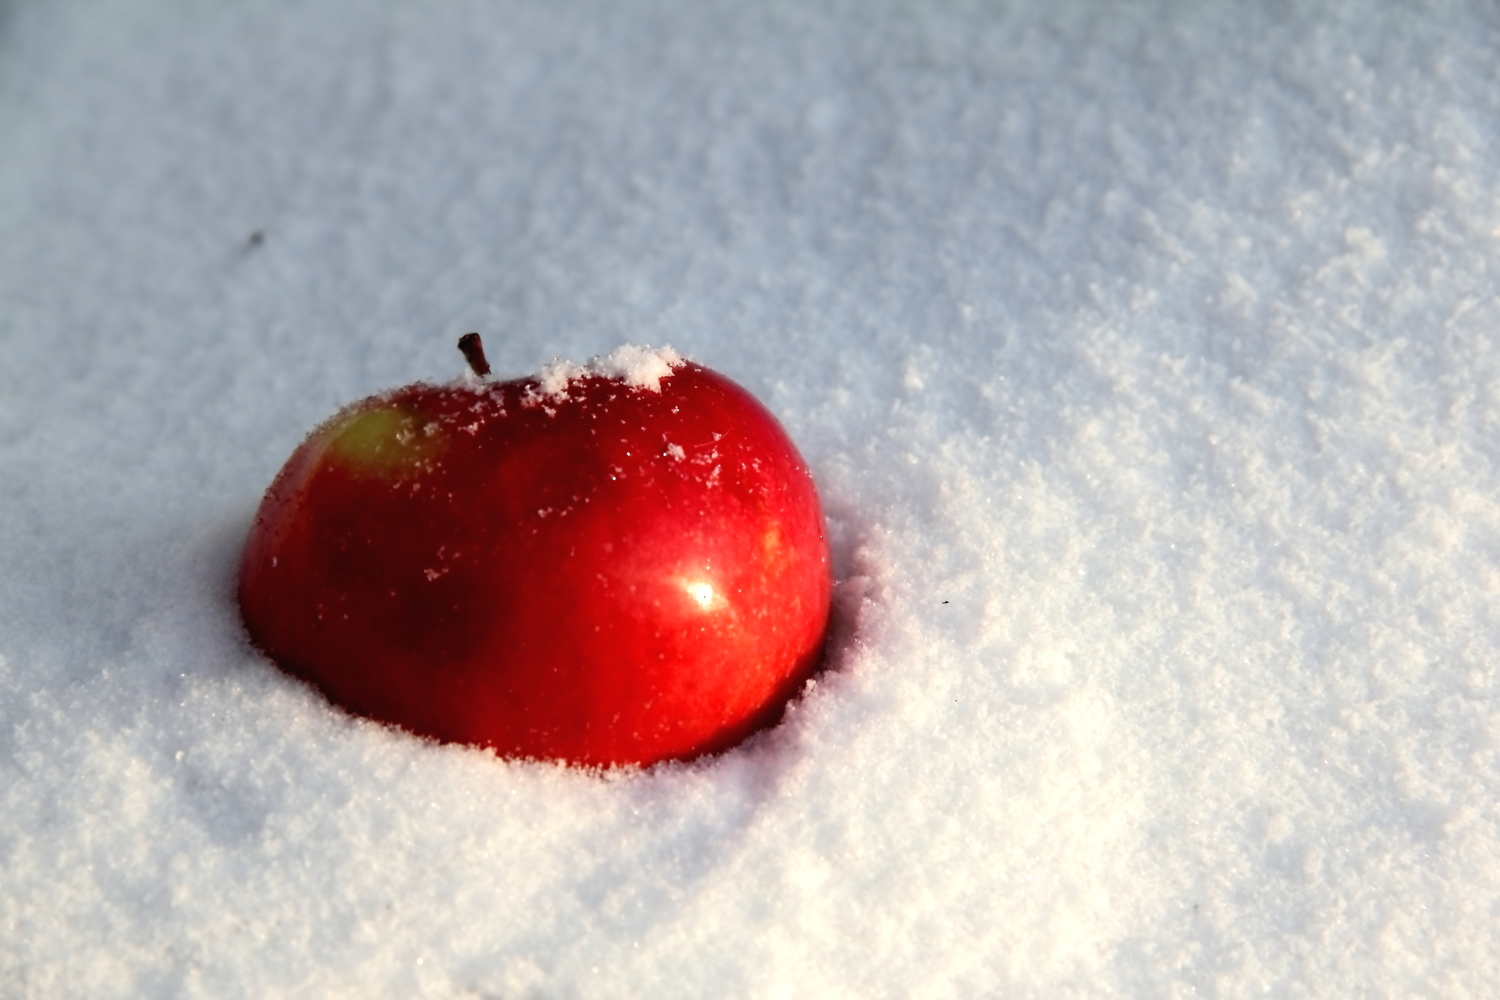 Яблоки на снегу( М.Муромов)